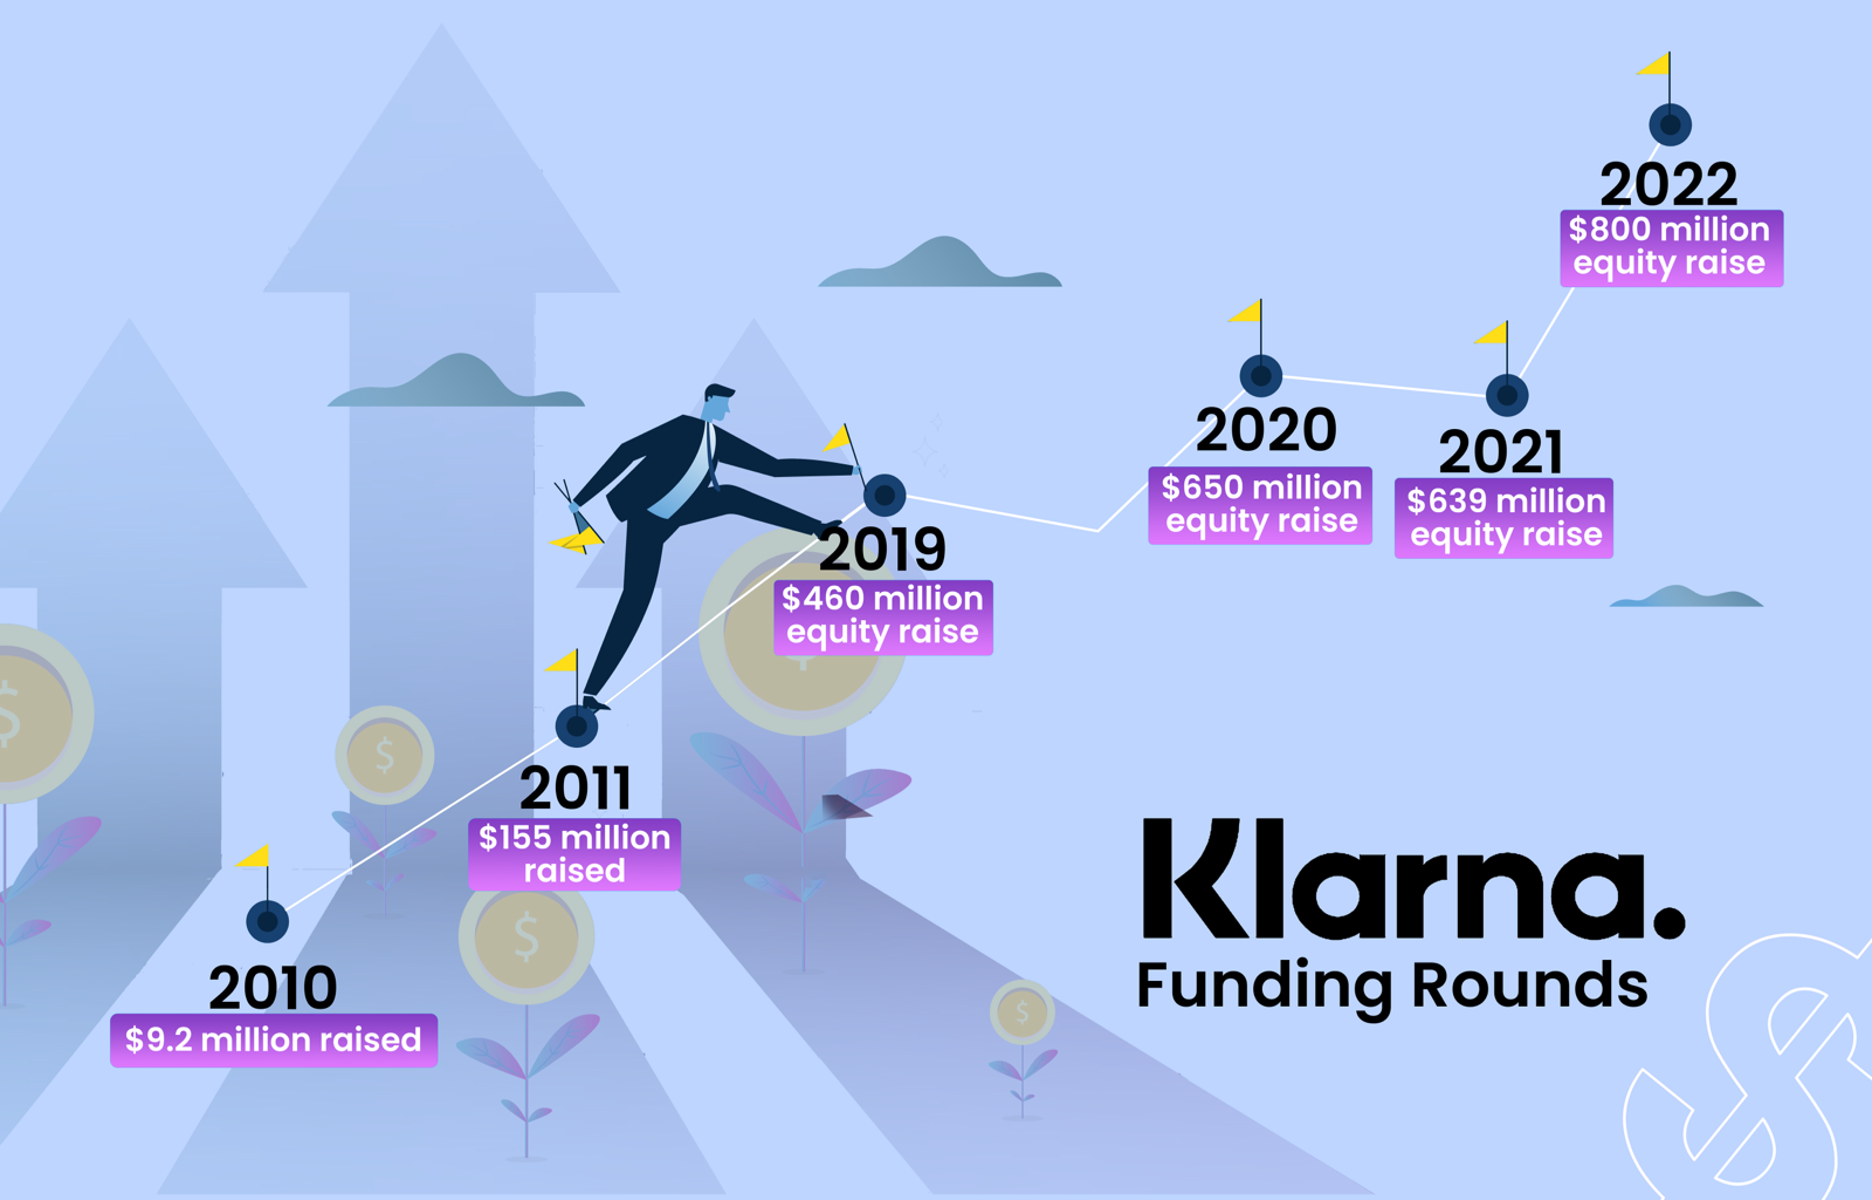 Klarna funding rounds in us dollars since 2010